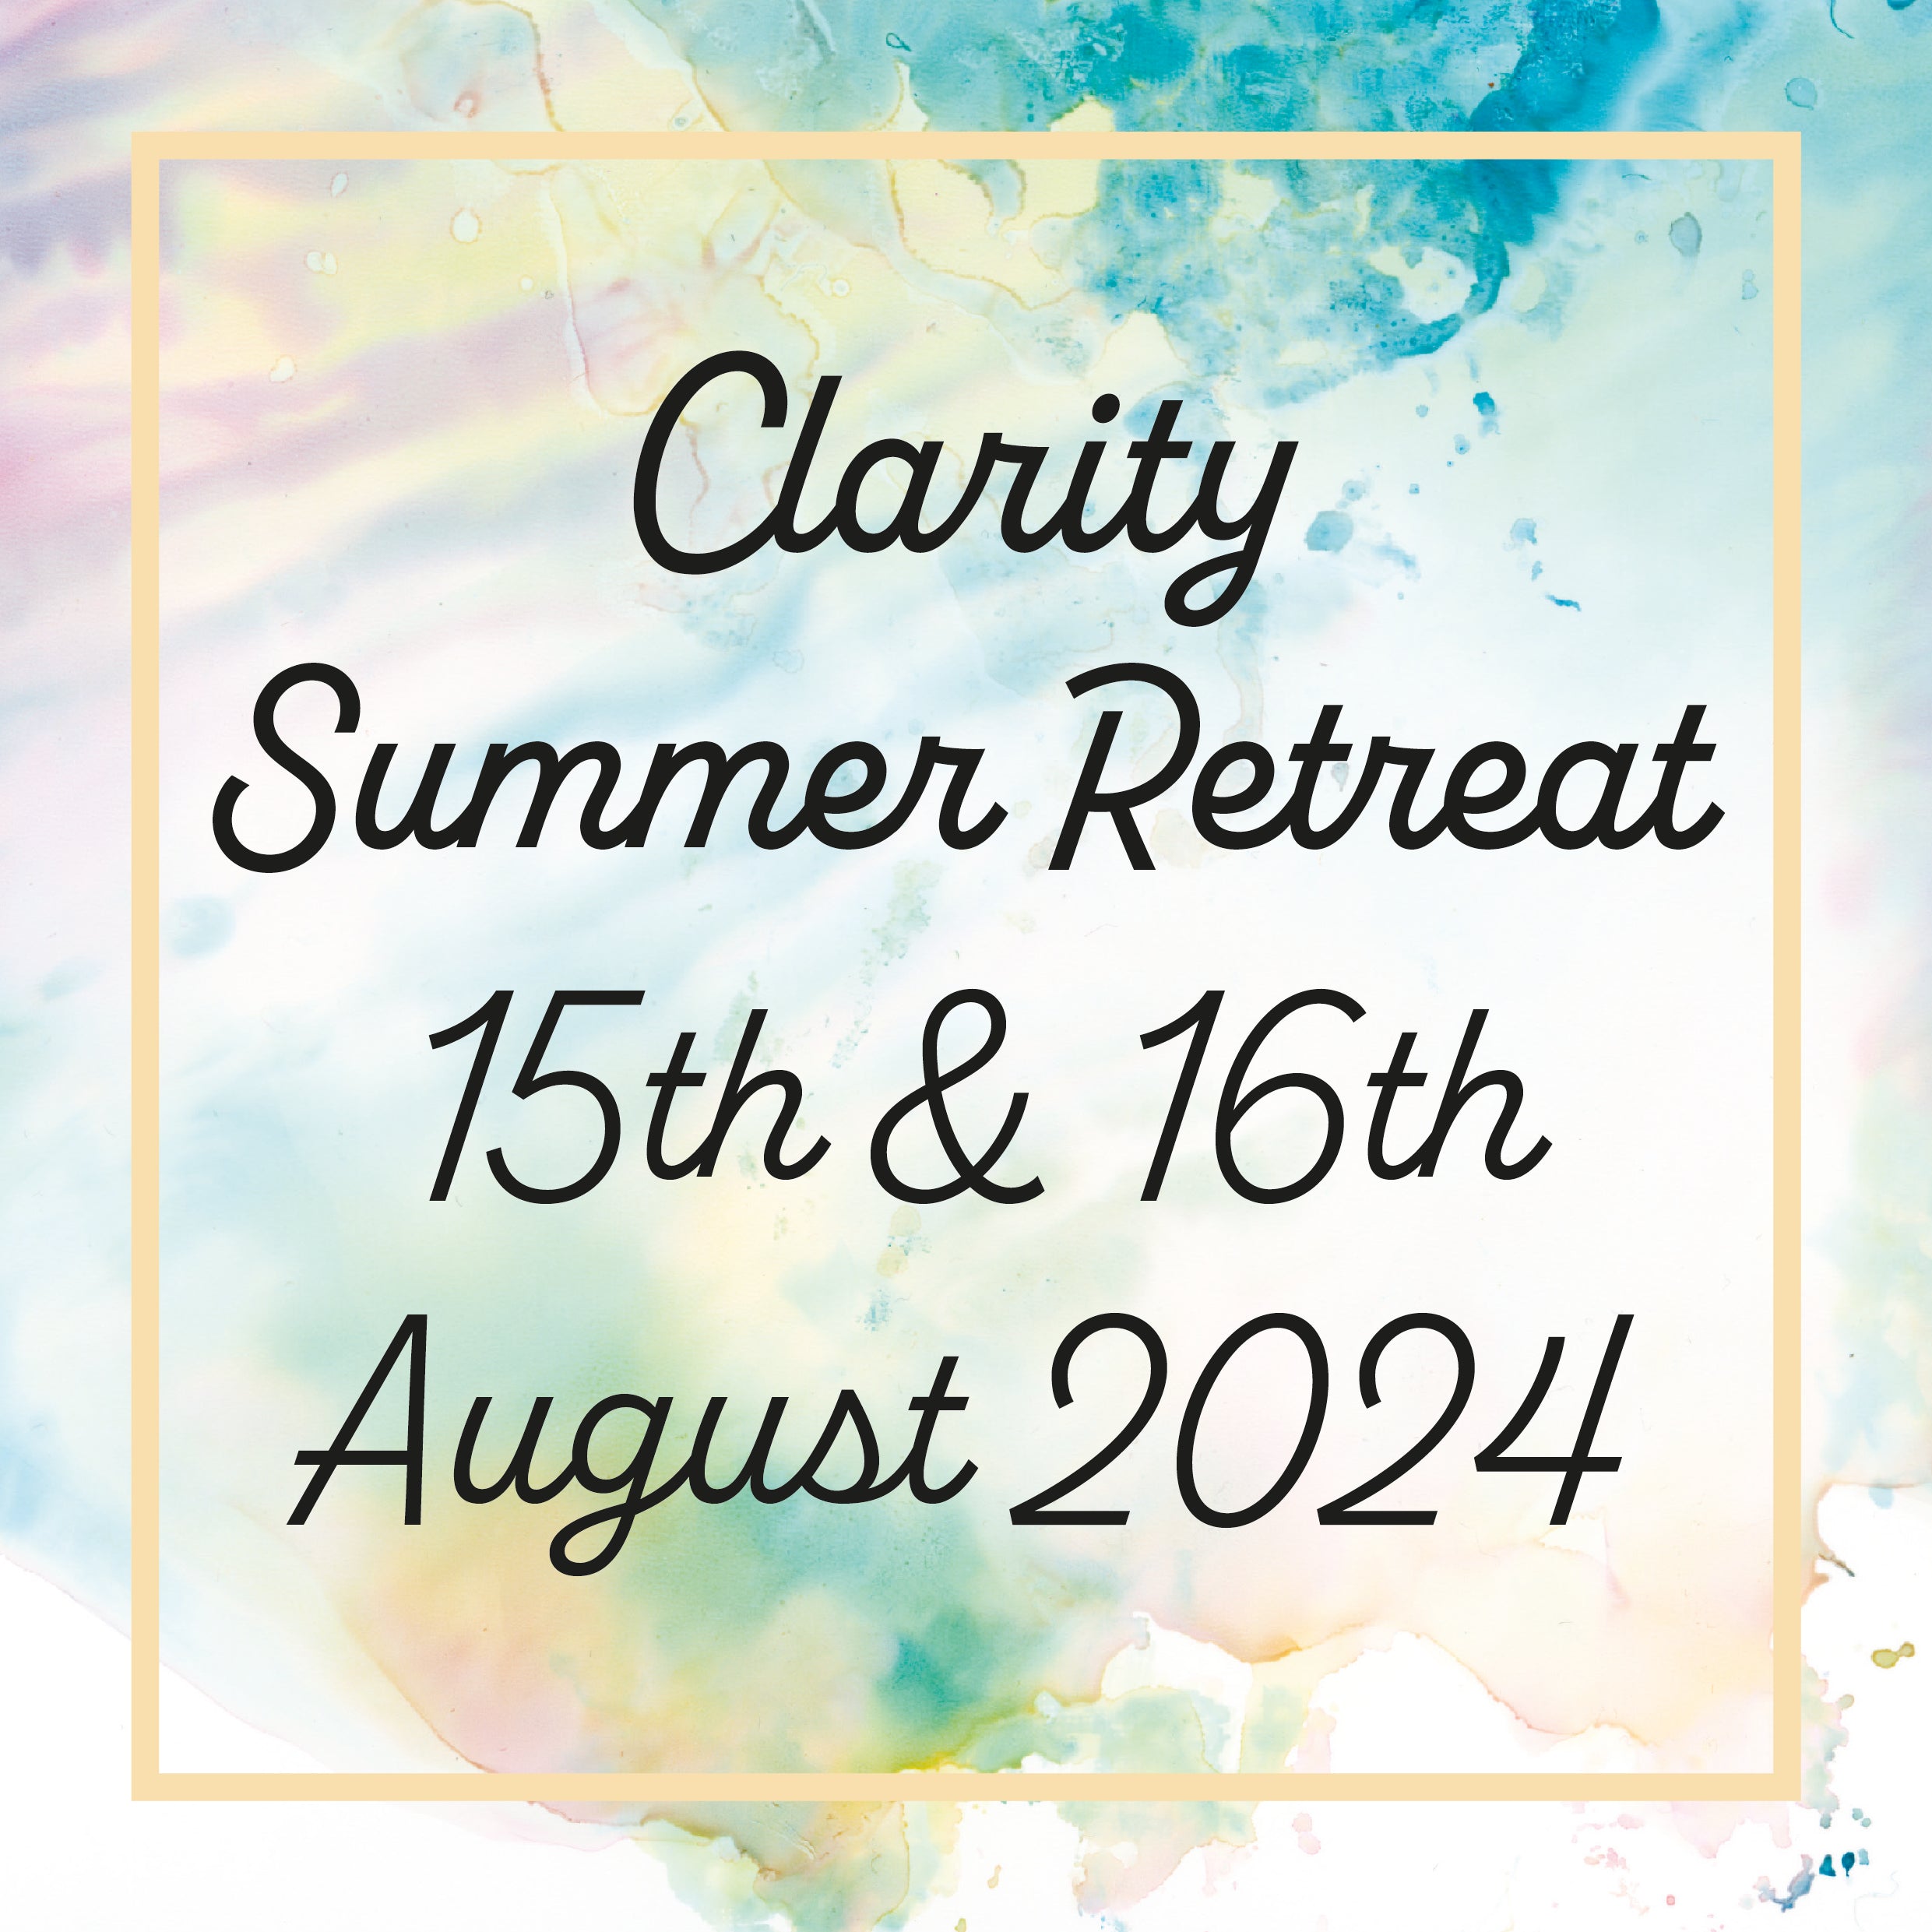 Clarity Summer Retreats 2024 - Ditton - August 15th & 16th